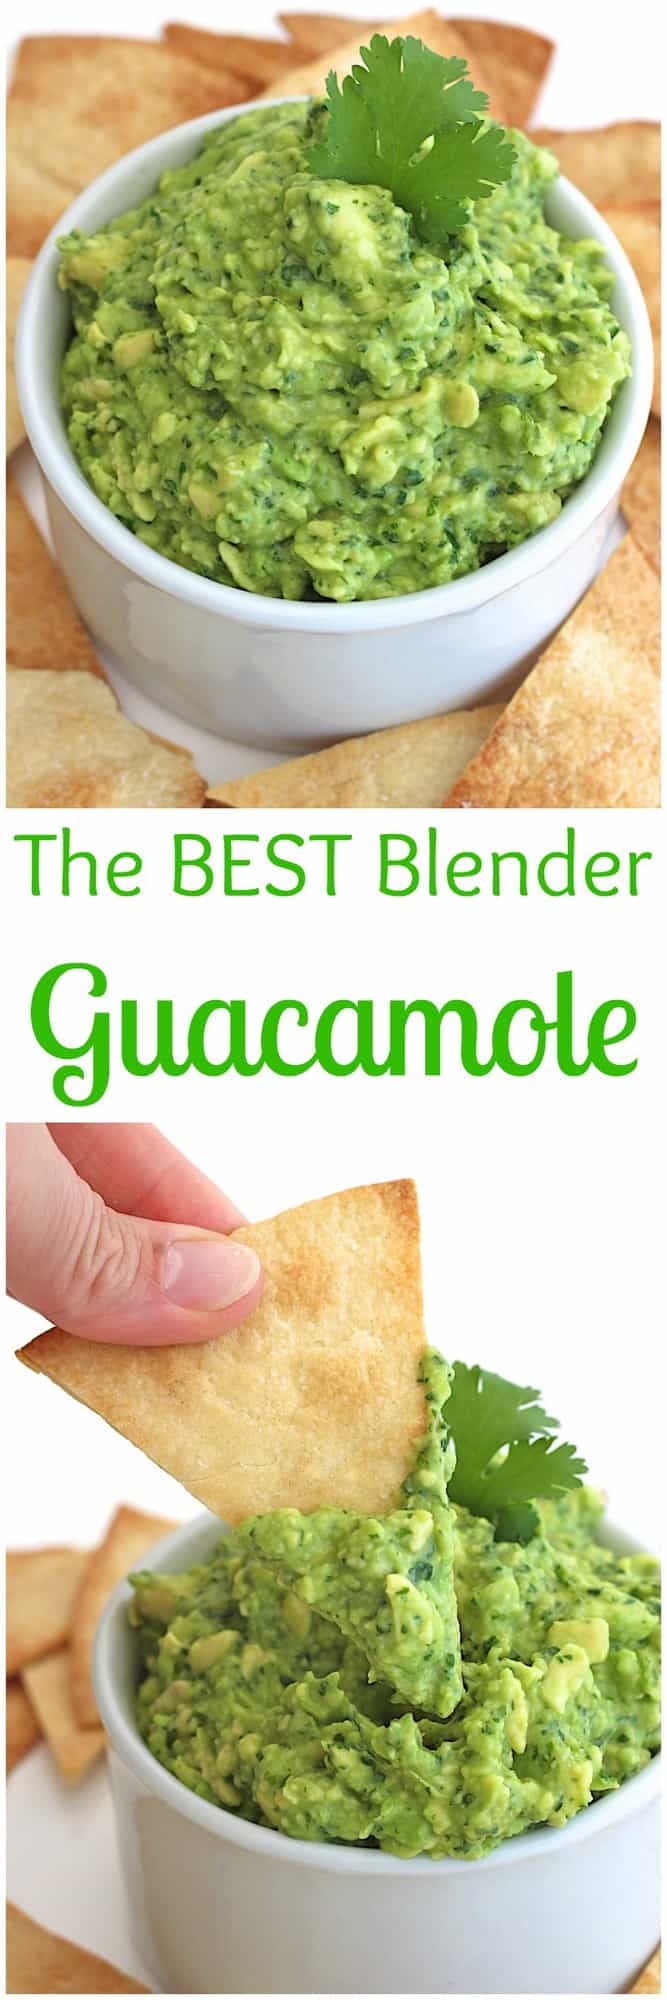 The BEST Blender Guacamole!